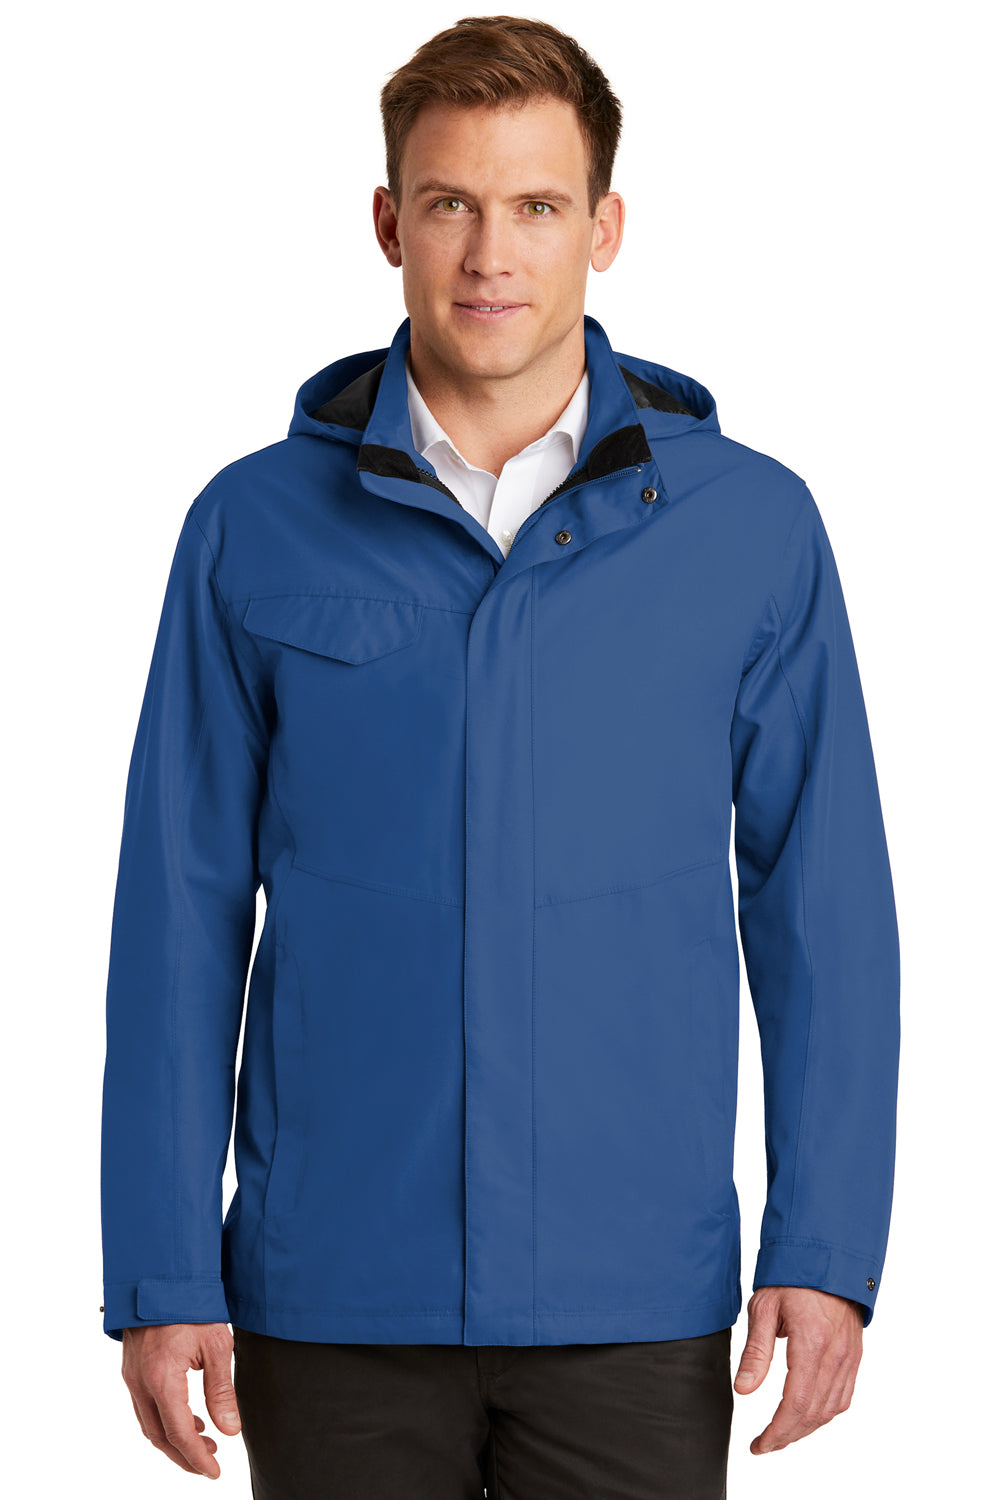 Port Authority J900 Mens Collective Waterproof Full Zip Hooded Jacket Night Sky Blue Front